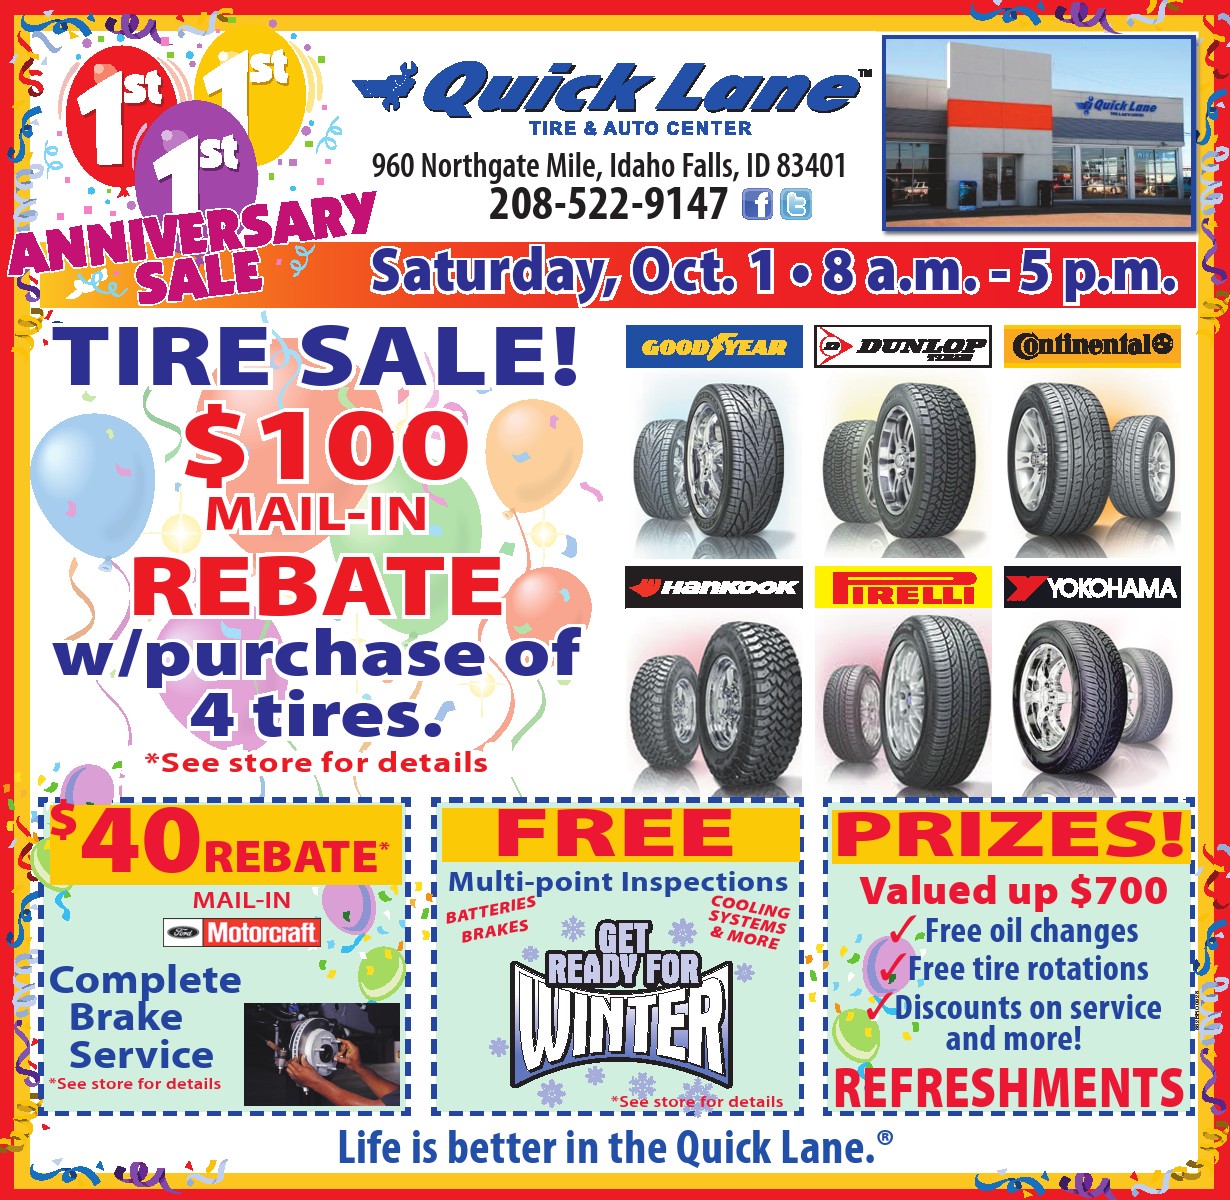 quick-lane-tire-and-auto-center-quick-lane-1-year-anniversary